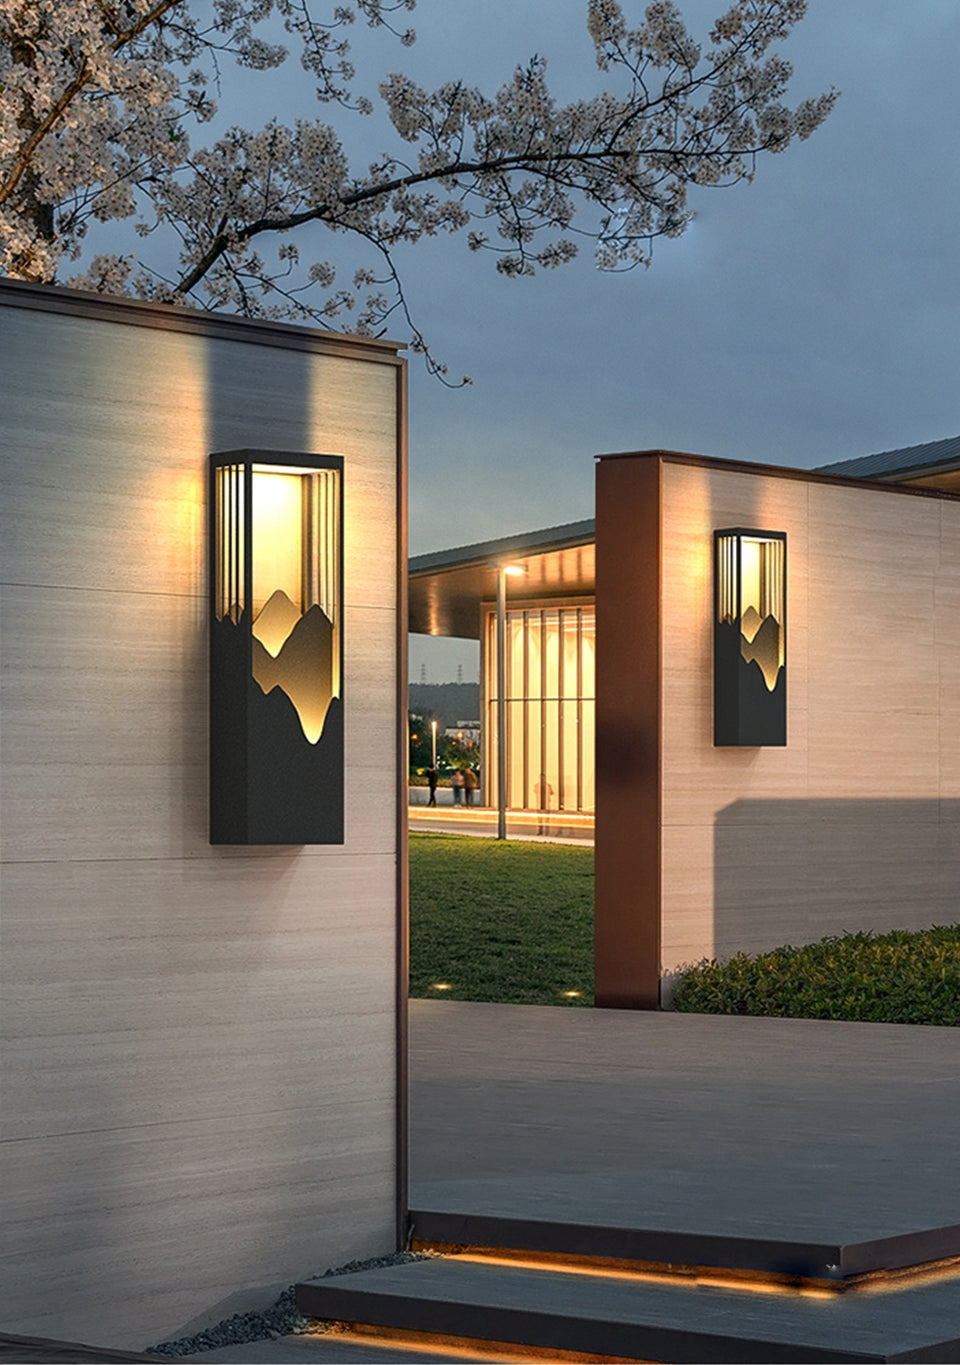 Black Solar Outdoor Original Design Waterproof Wall Light For Garden, Courtyard